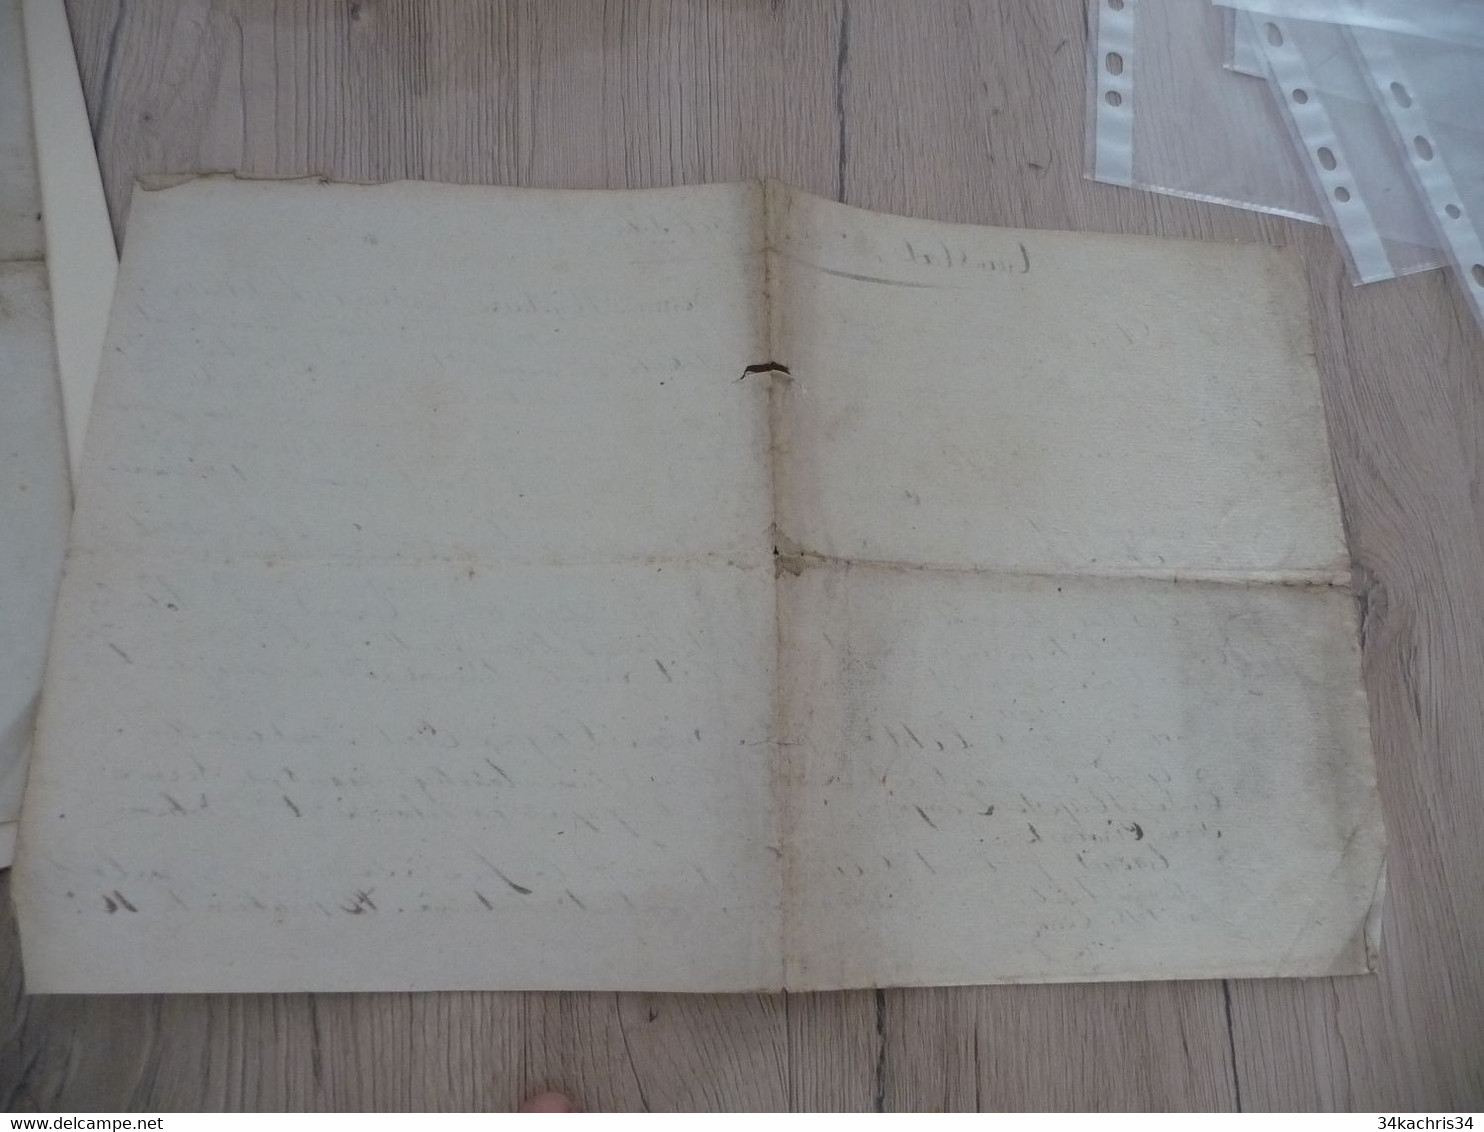 Haut Rhin Demande Pension + Congé Absolu Niedhard Régiment Dragons Price Rosenberg 1818 Autographes - Dokumente